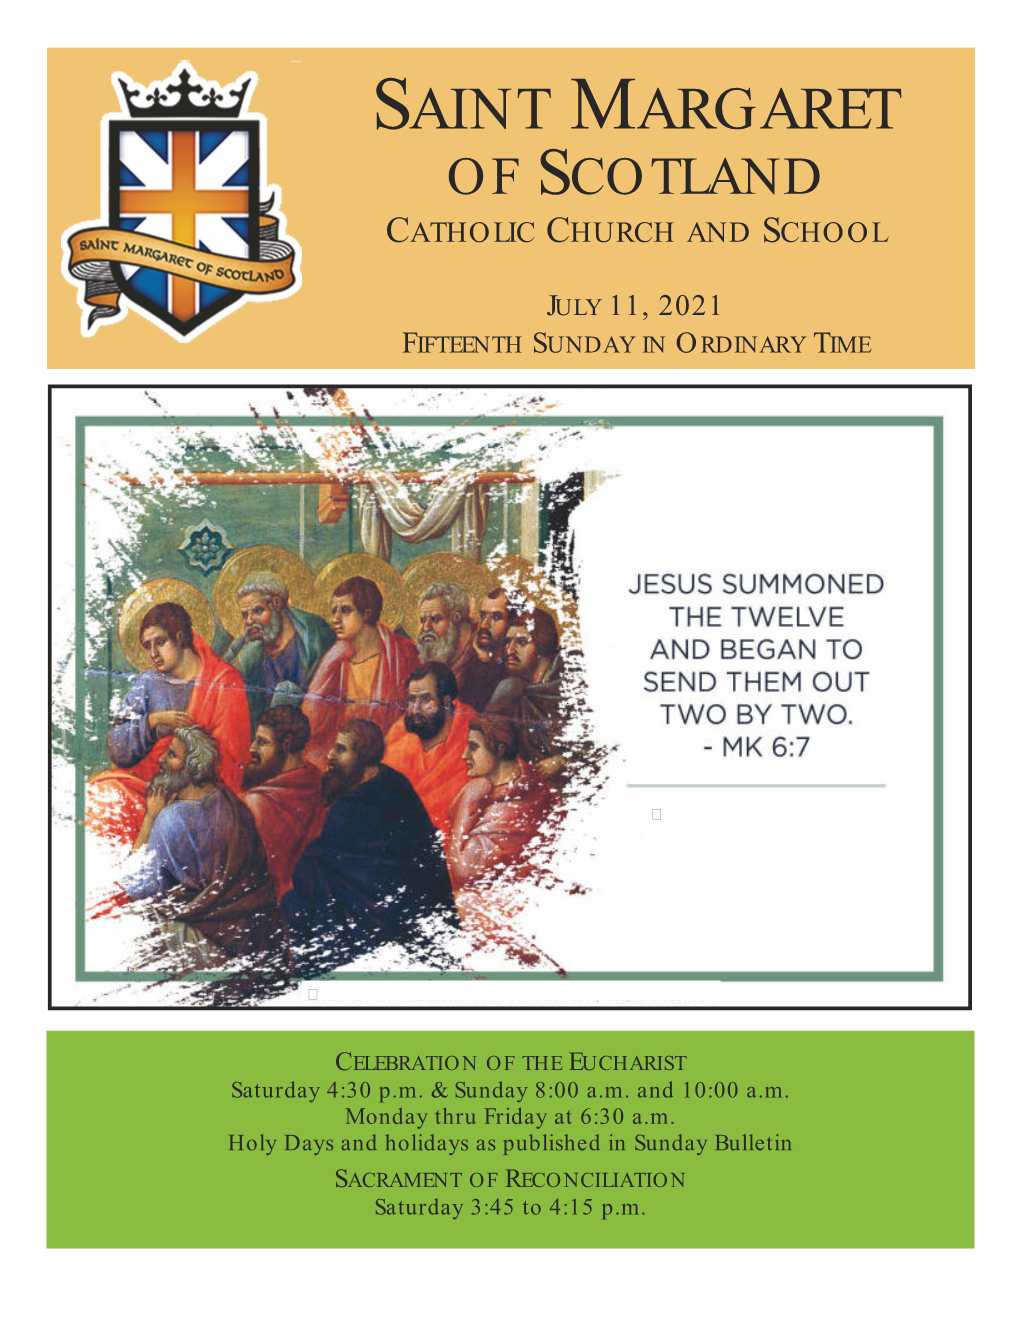 Saint Margaret of Scotland Catholic Church and School